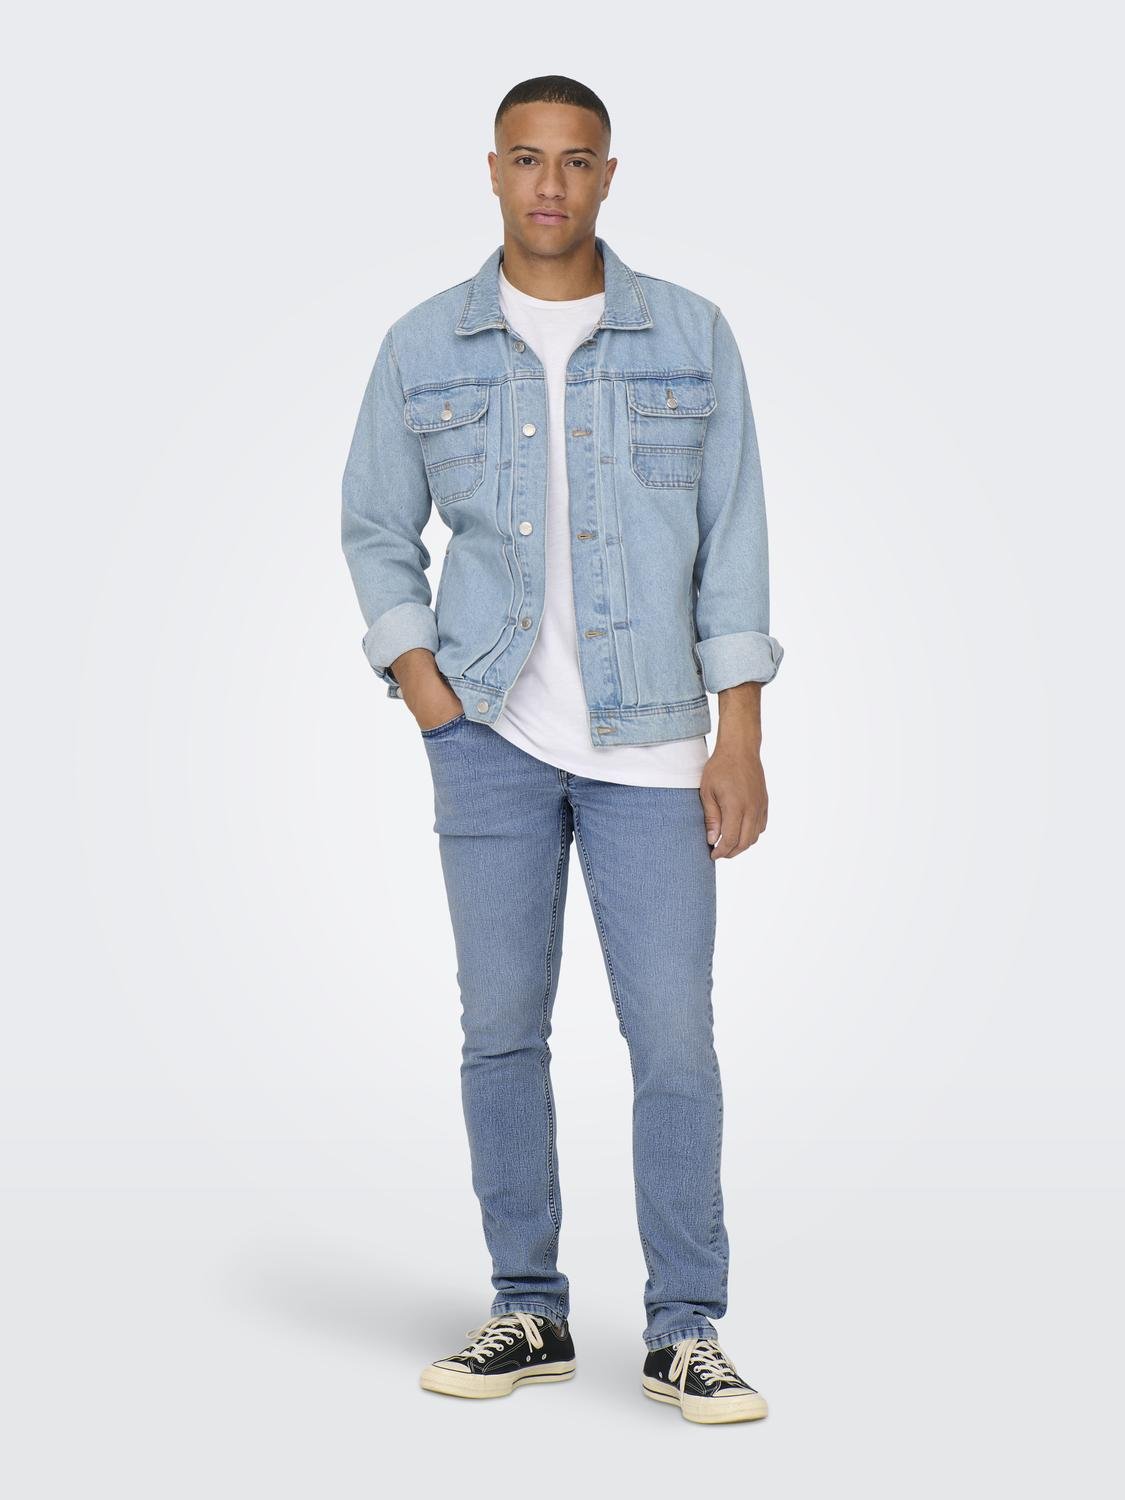 ONLY & SONS ONSLoom Slim Jeans -Light Blue Denim - 22027899